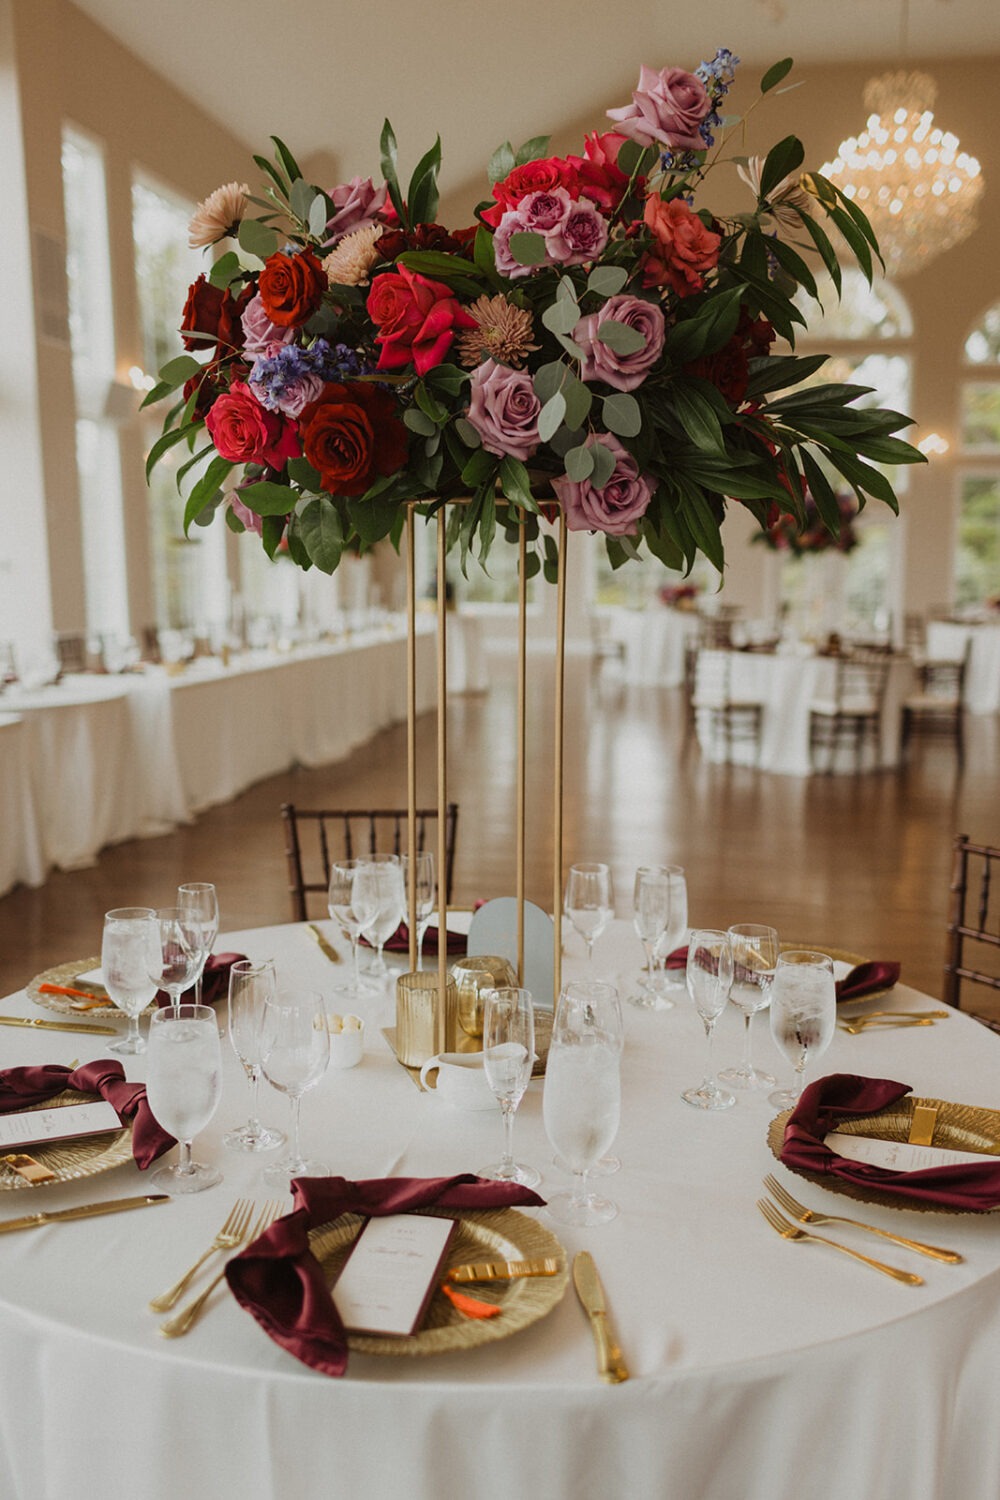 floral decor at wedding reception